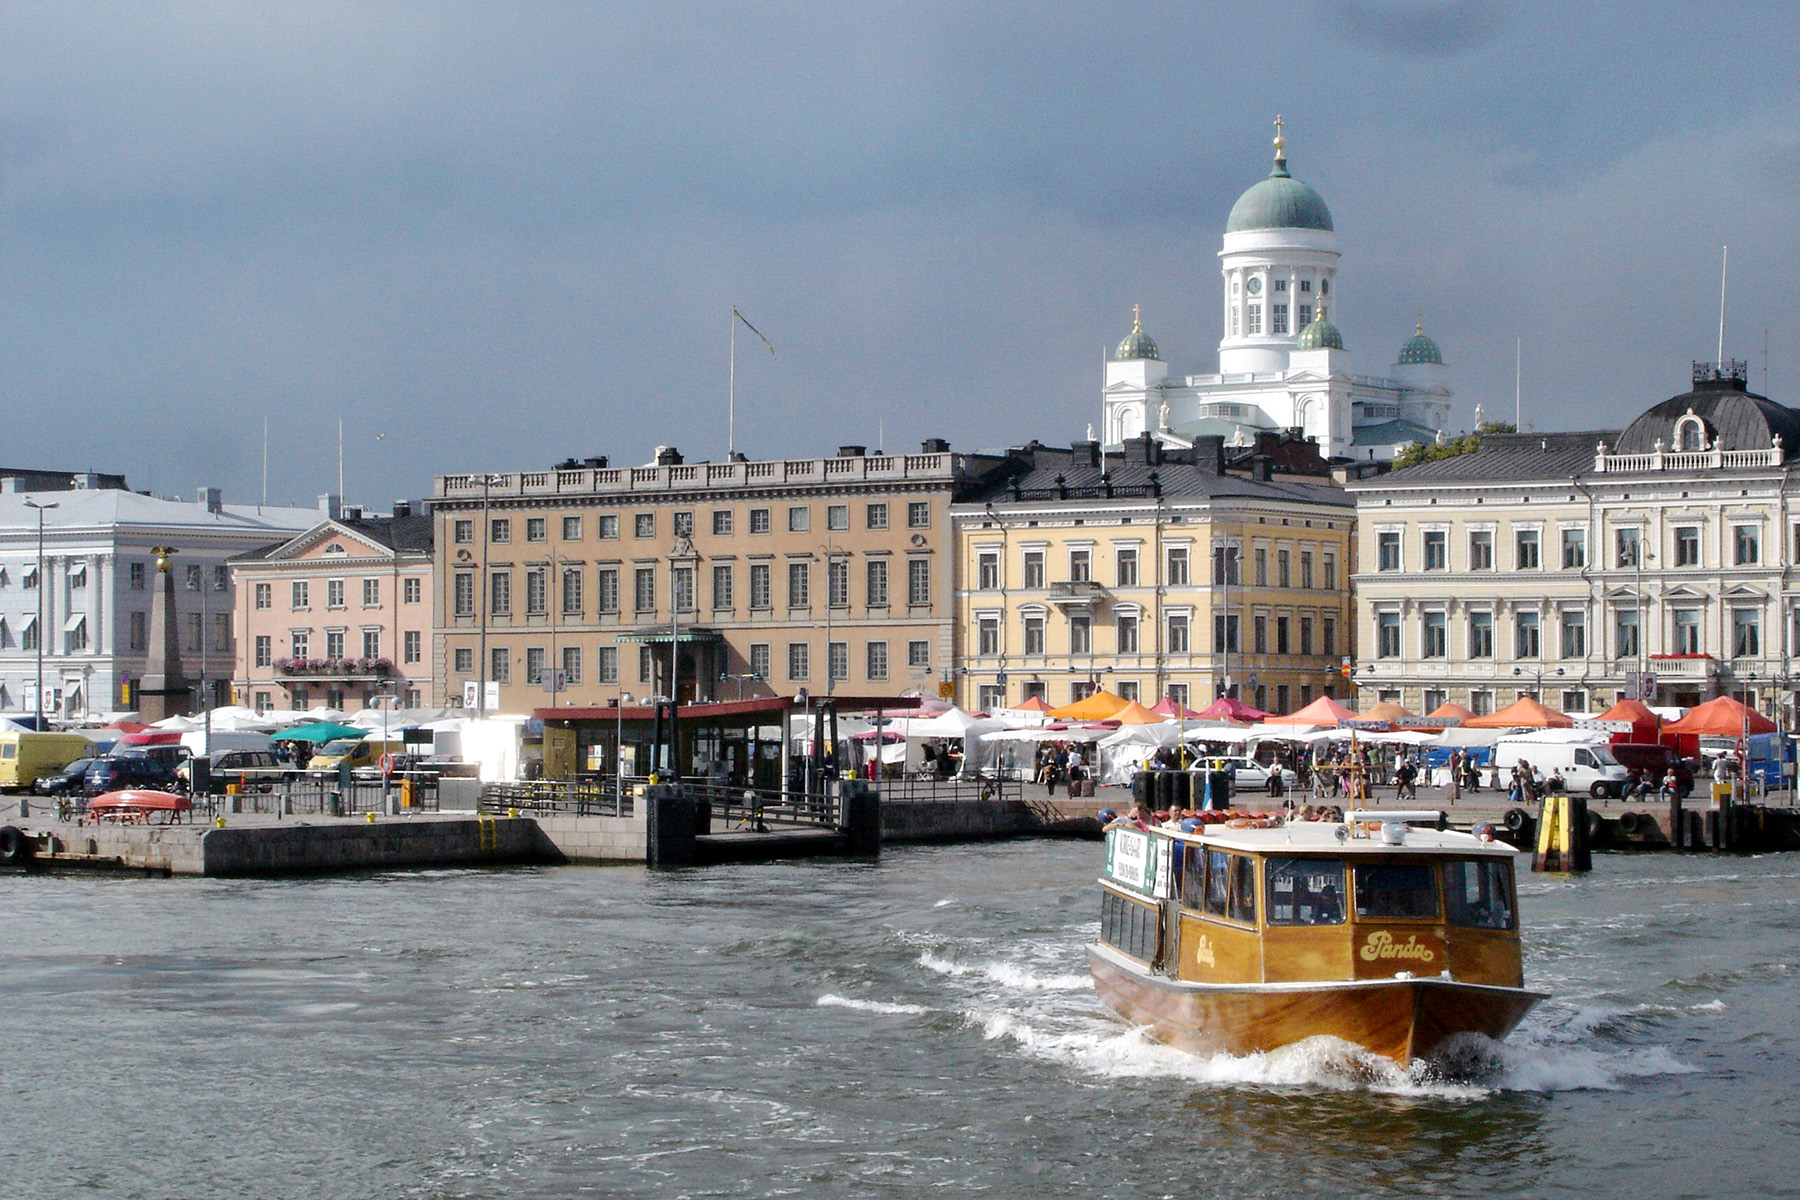  Helsinki  highlights International Travel News